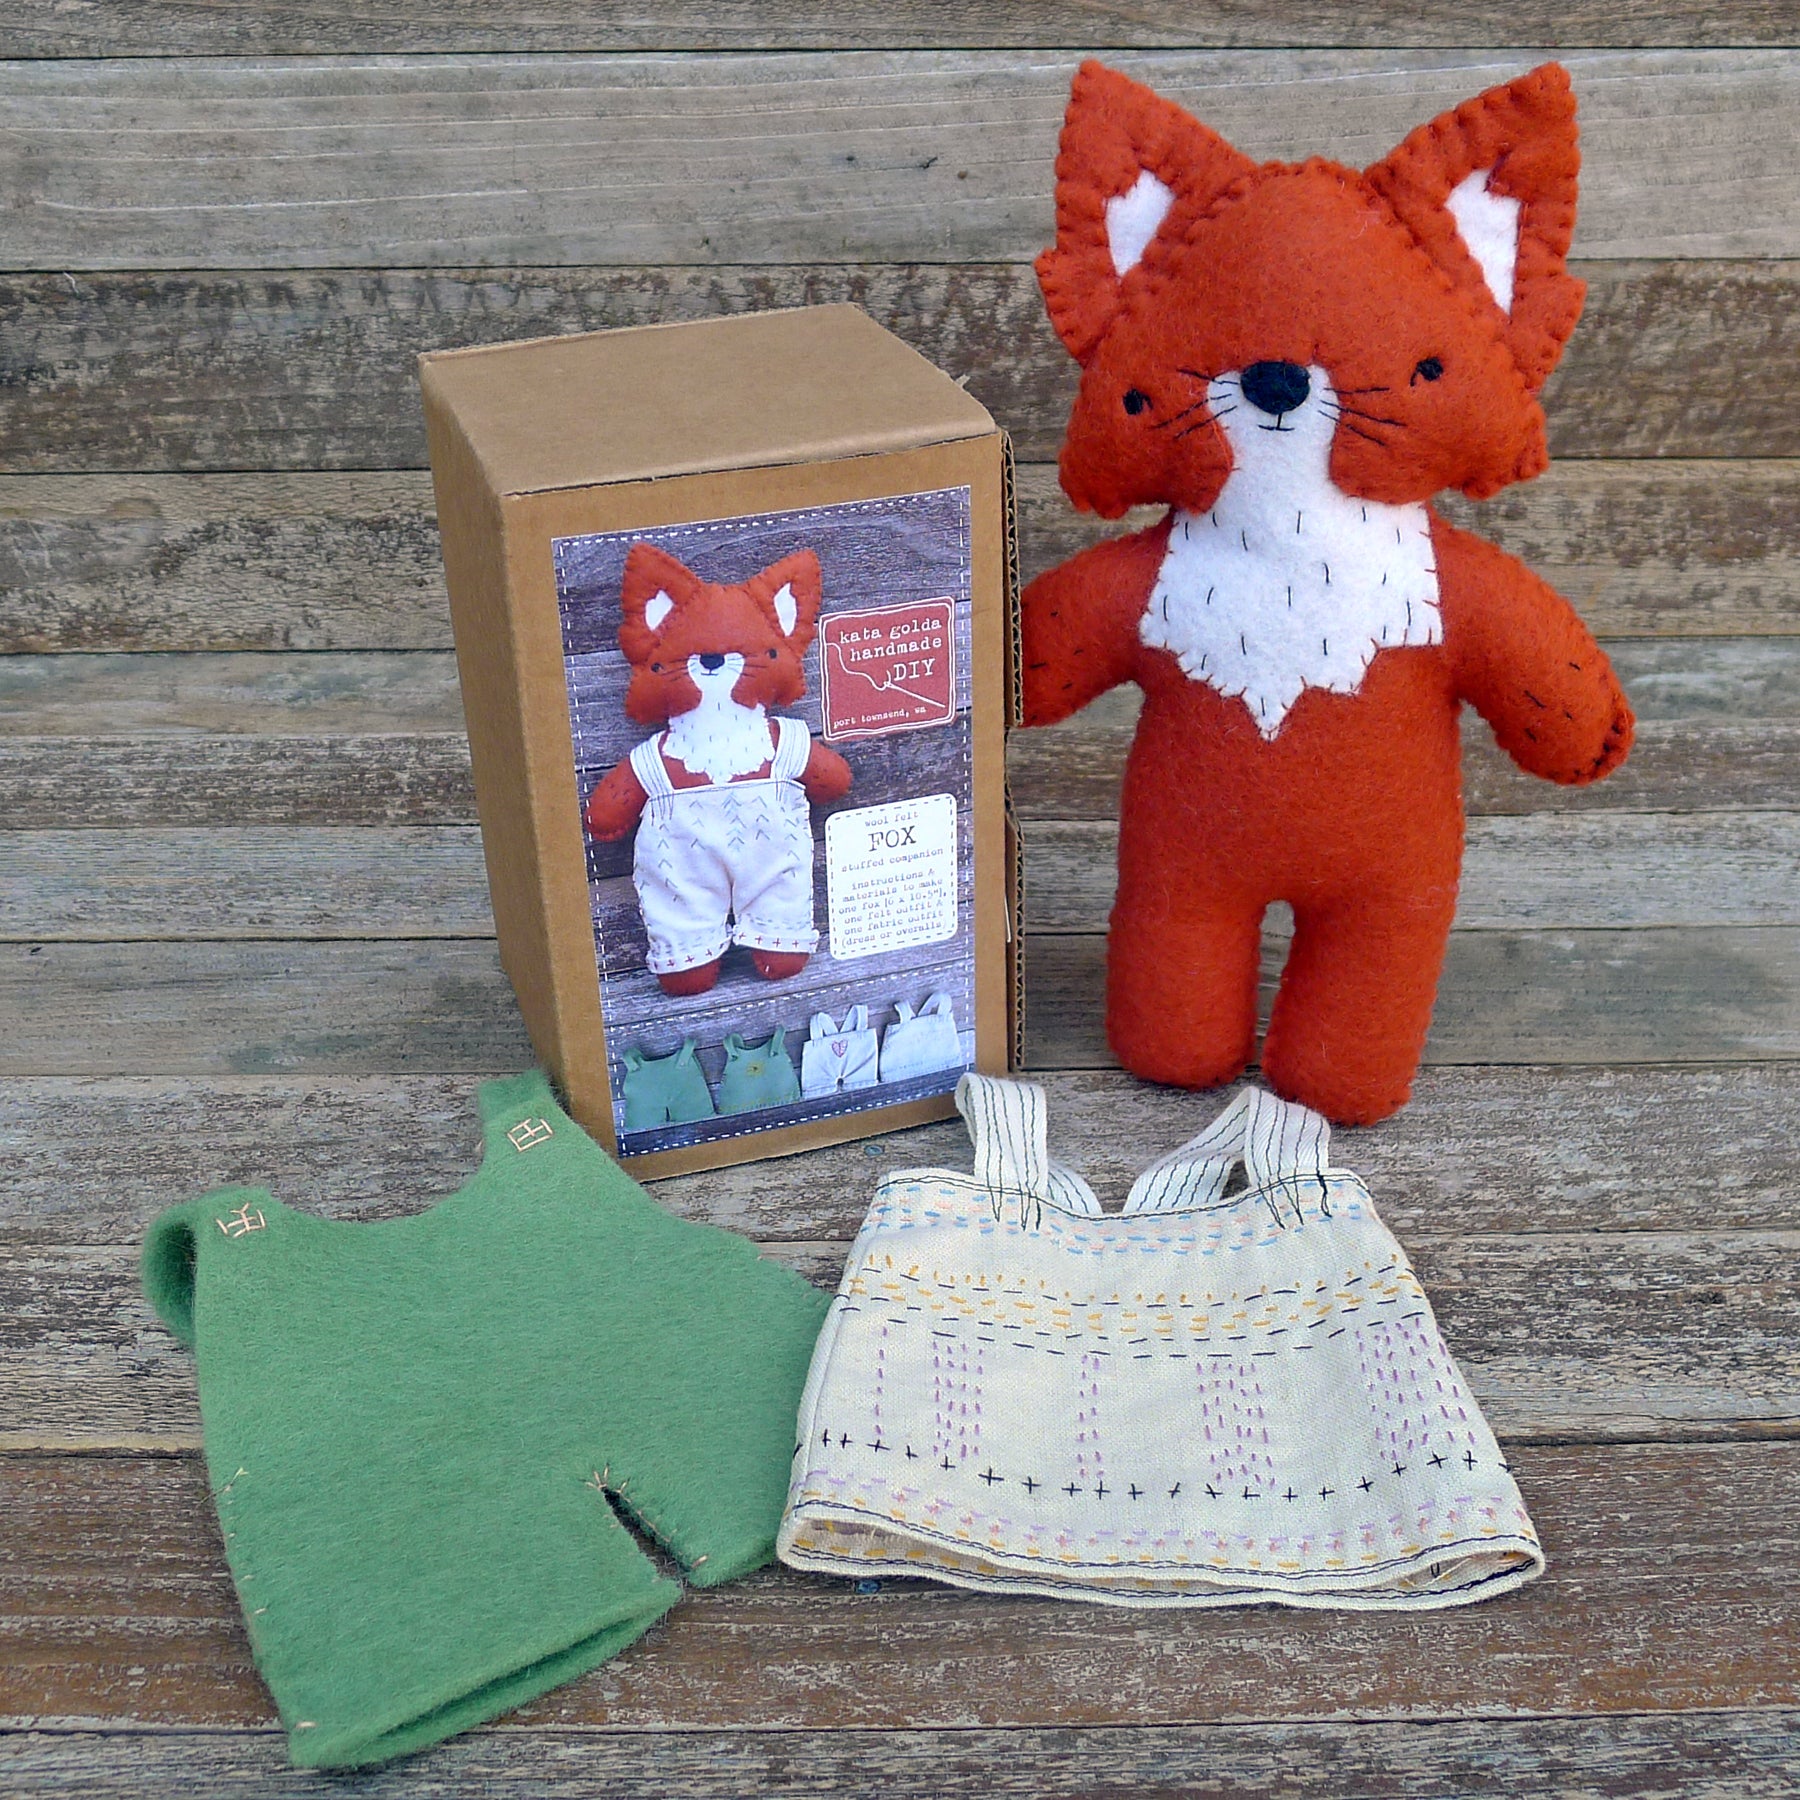 Felt Animal Kit Charlotte fox, Felix fox handmade gift holiday gift fun  craft kit story telling doll making unique stuffed animal